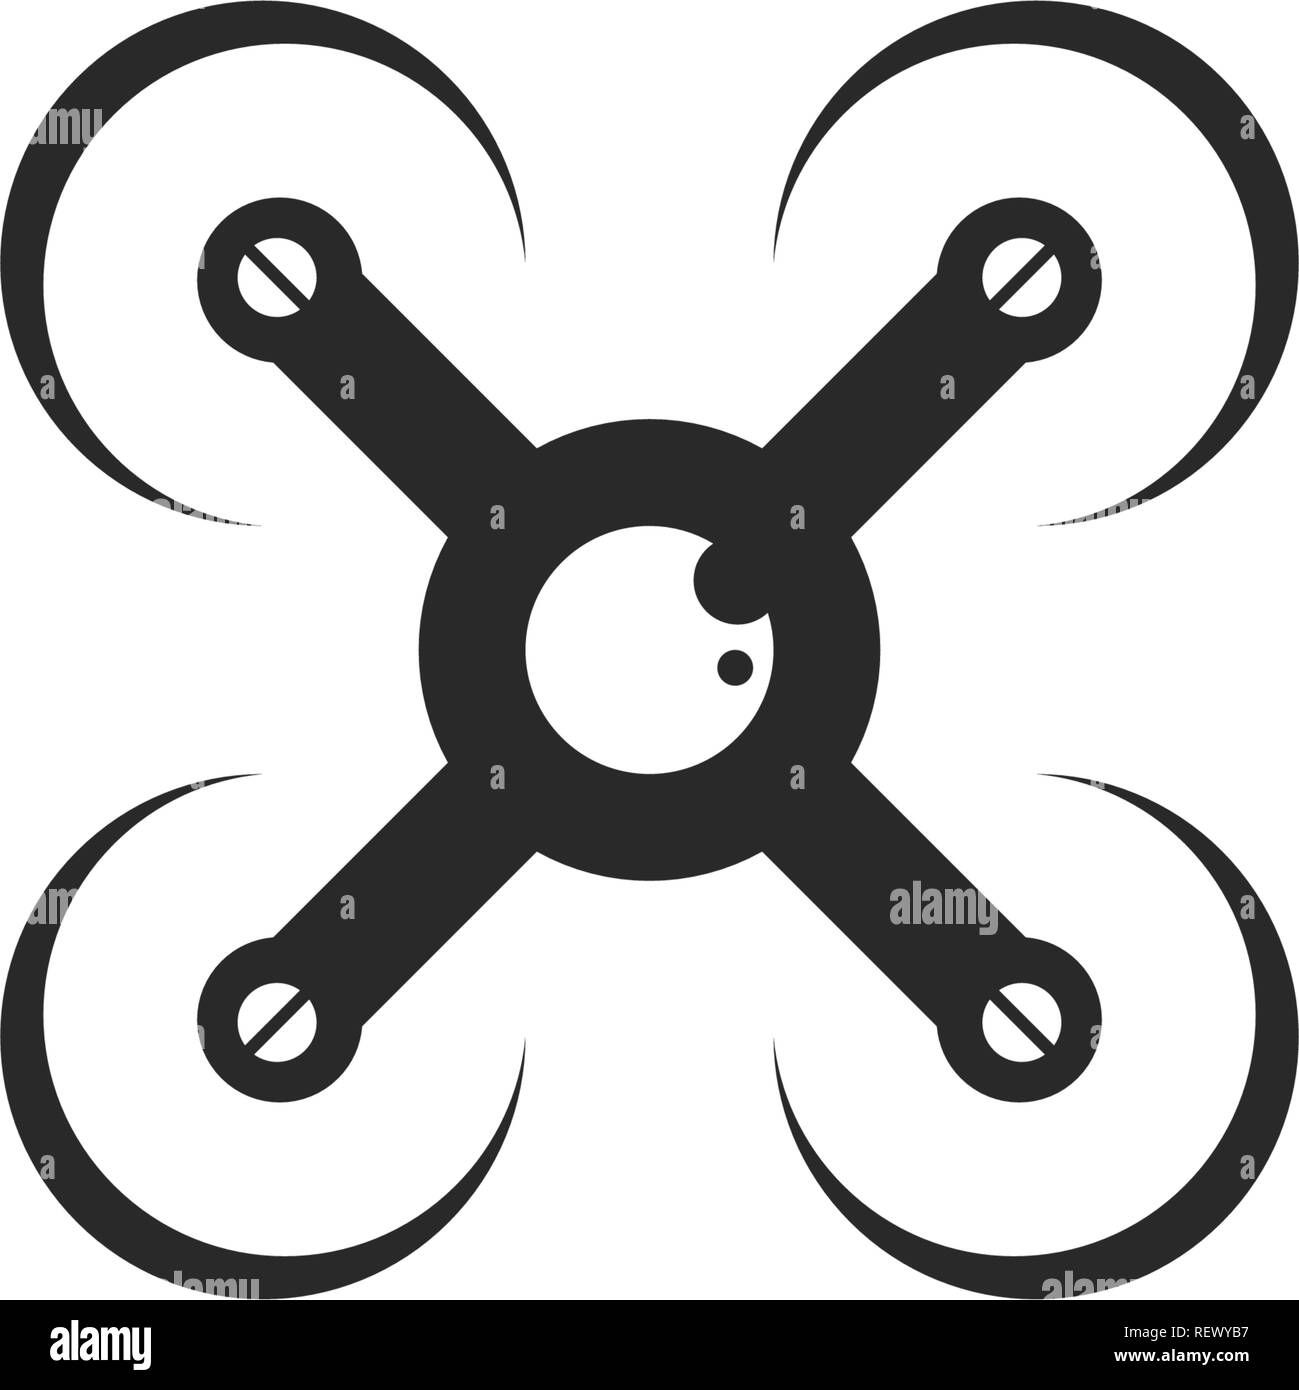 Drone logo and symbol vector Stock Vector